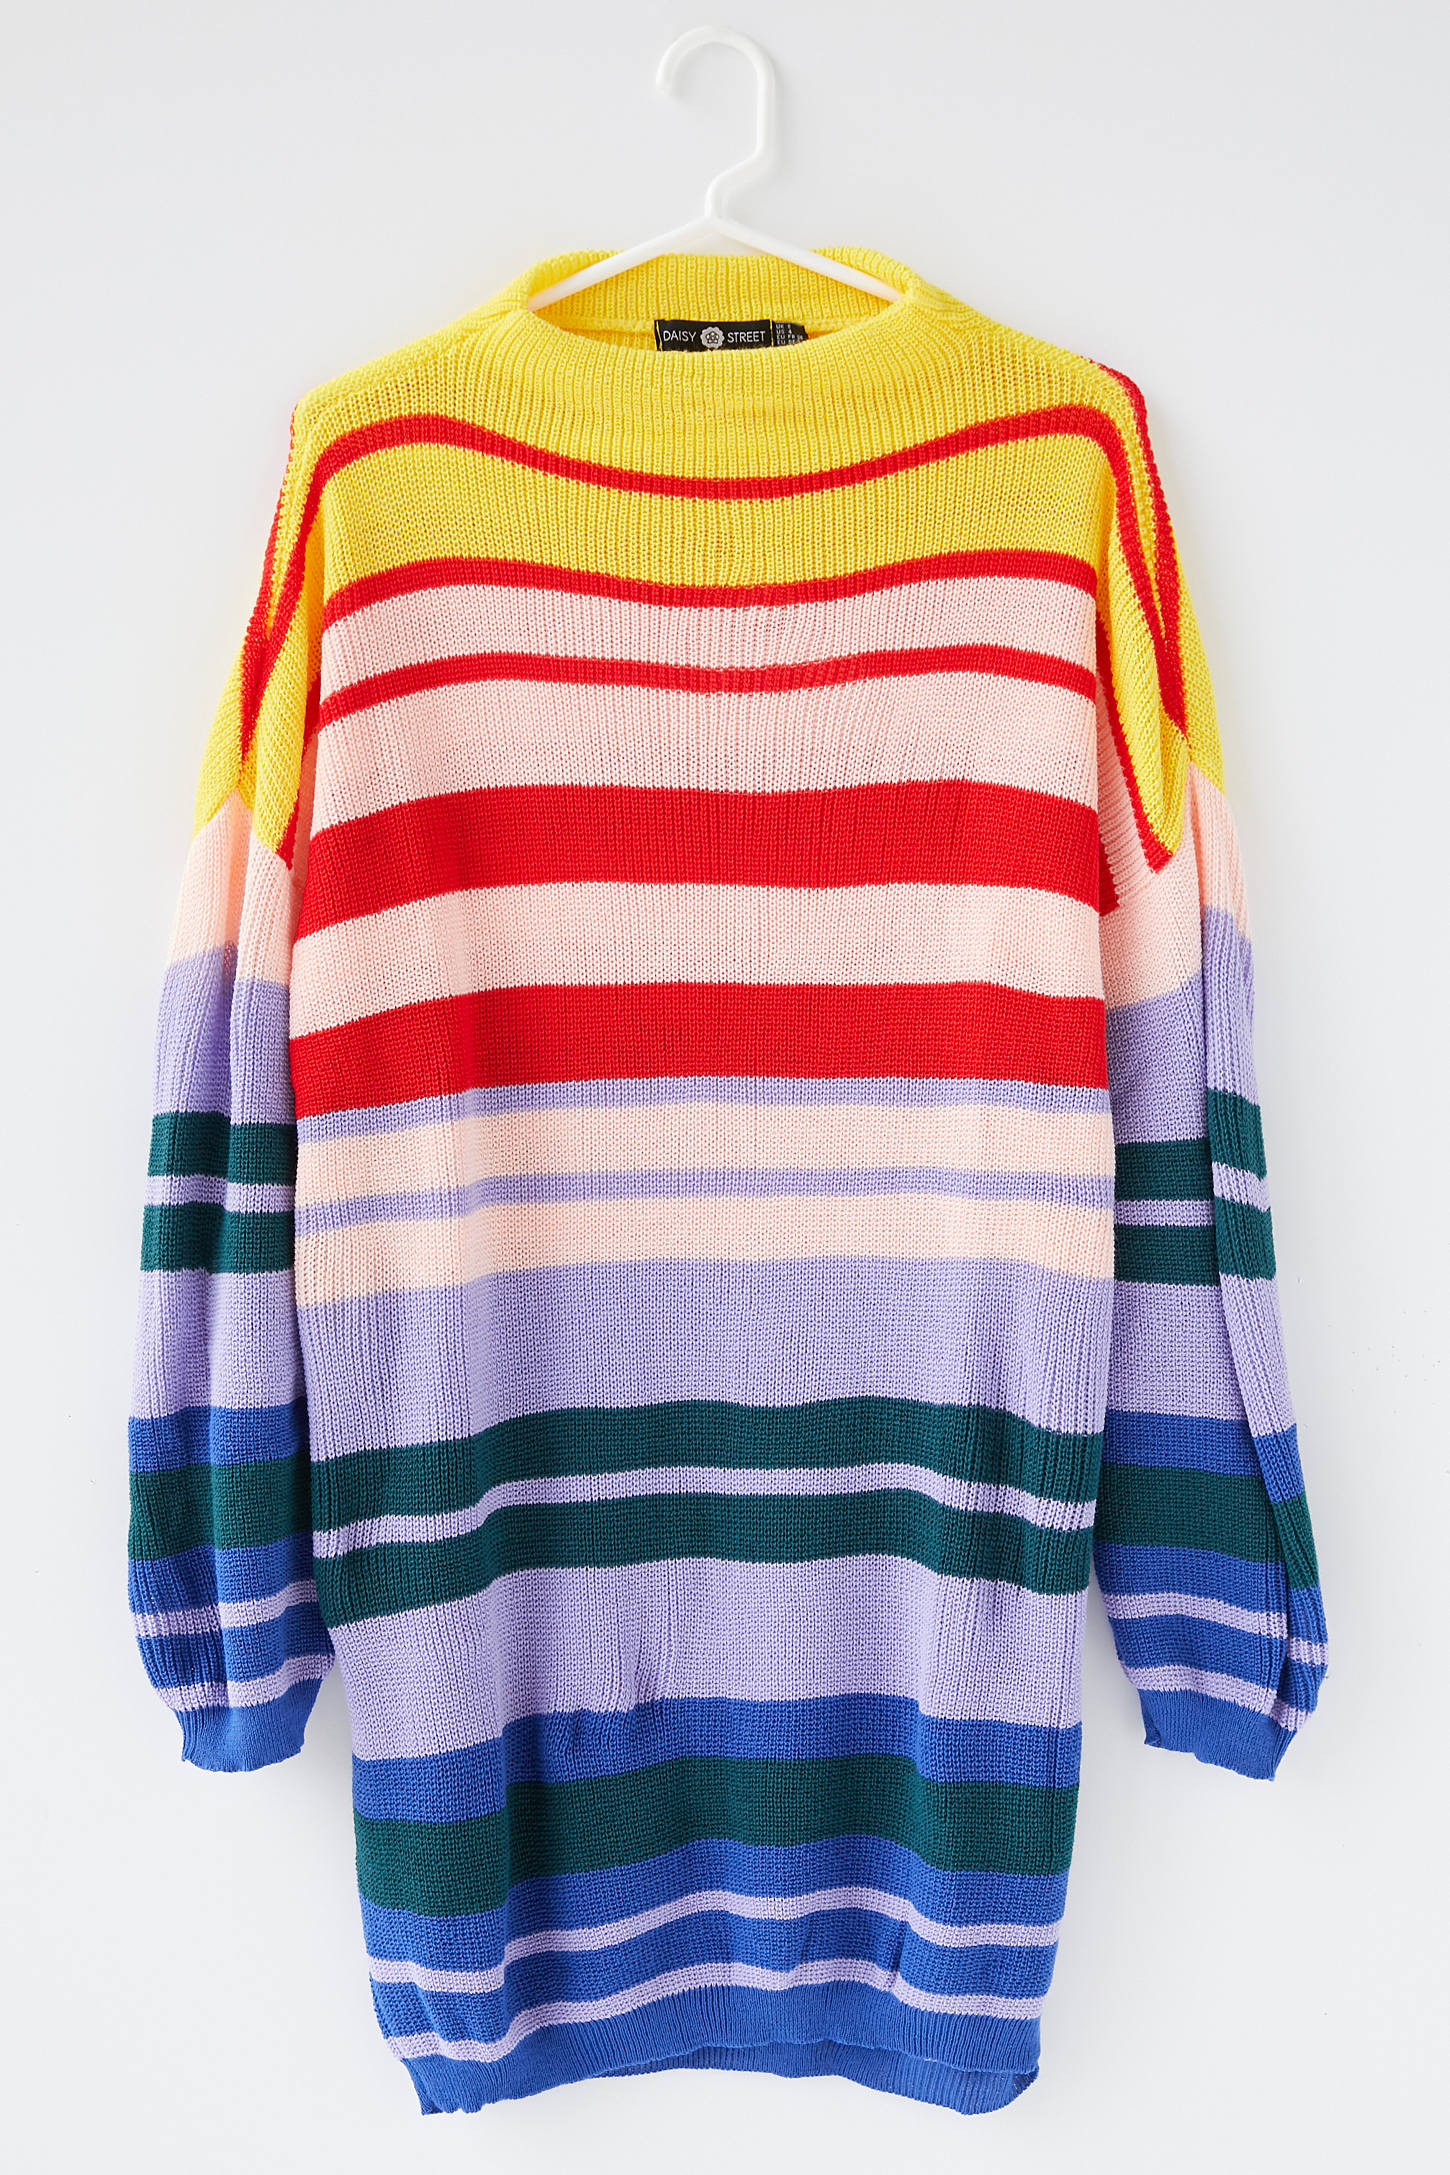 Daisy Street + Striped Knit Sweater Dress